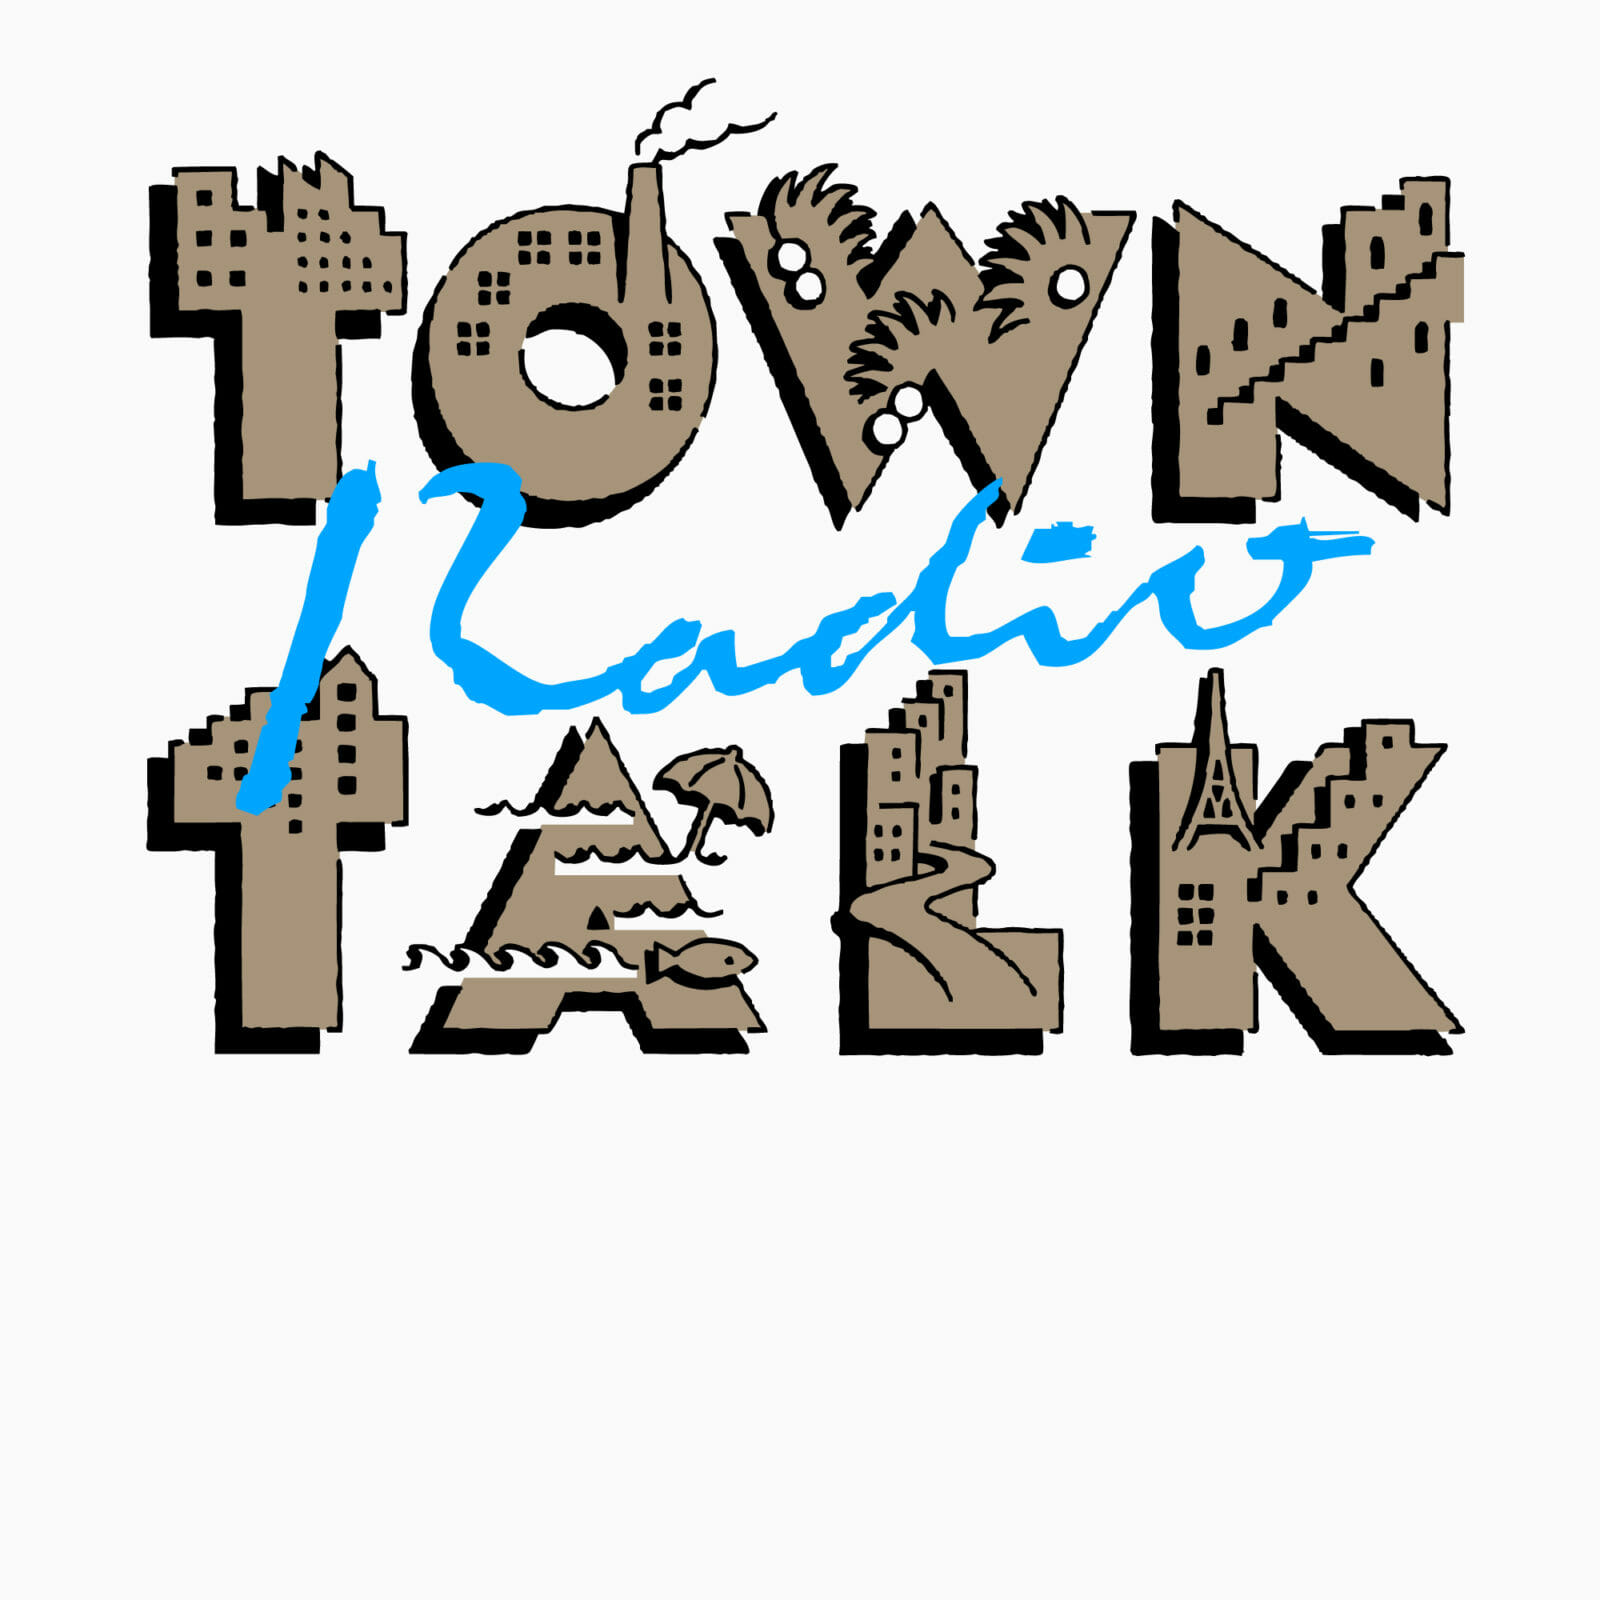 TOWN TALK RADIO Vol.15 by Tobira Records